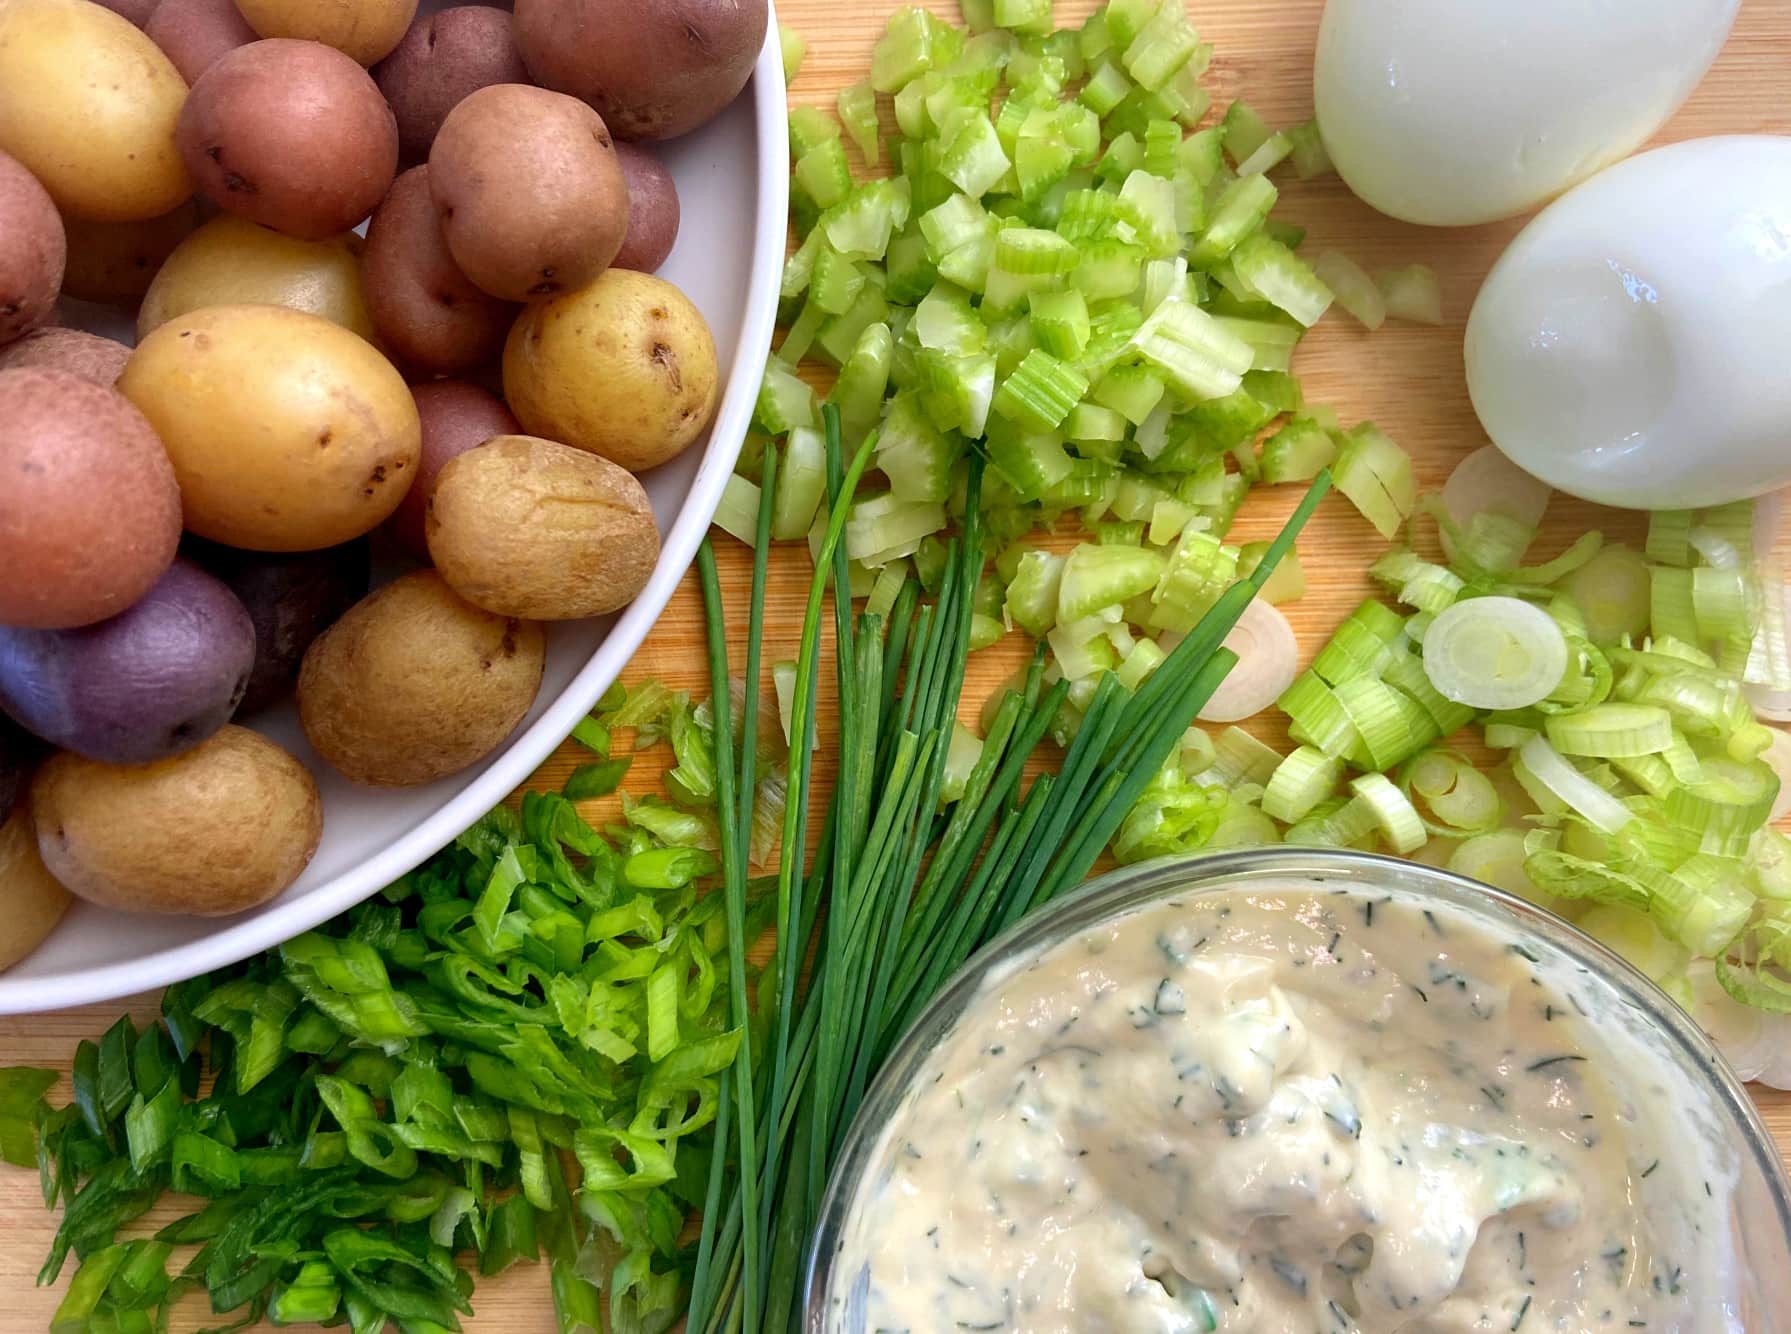 potato salad ingredients